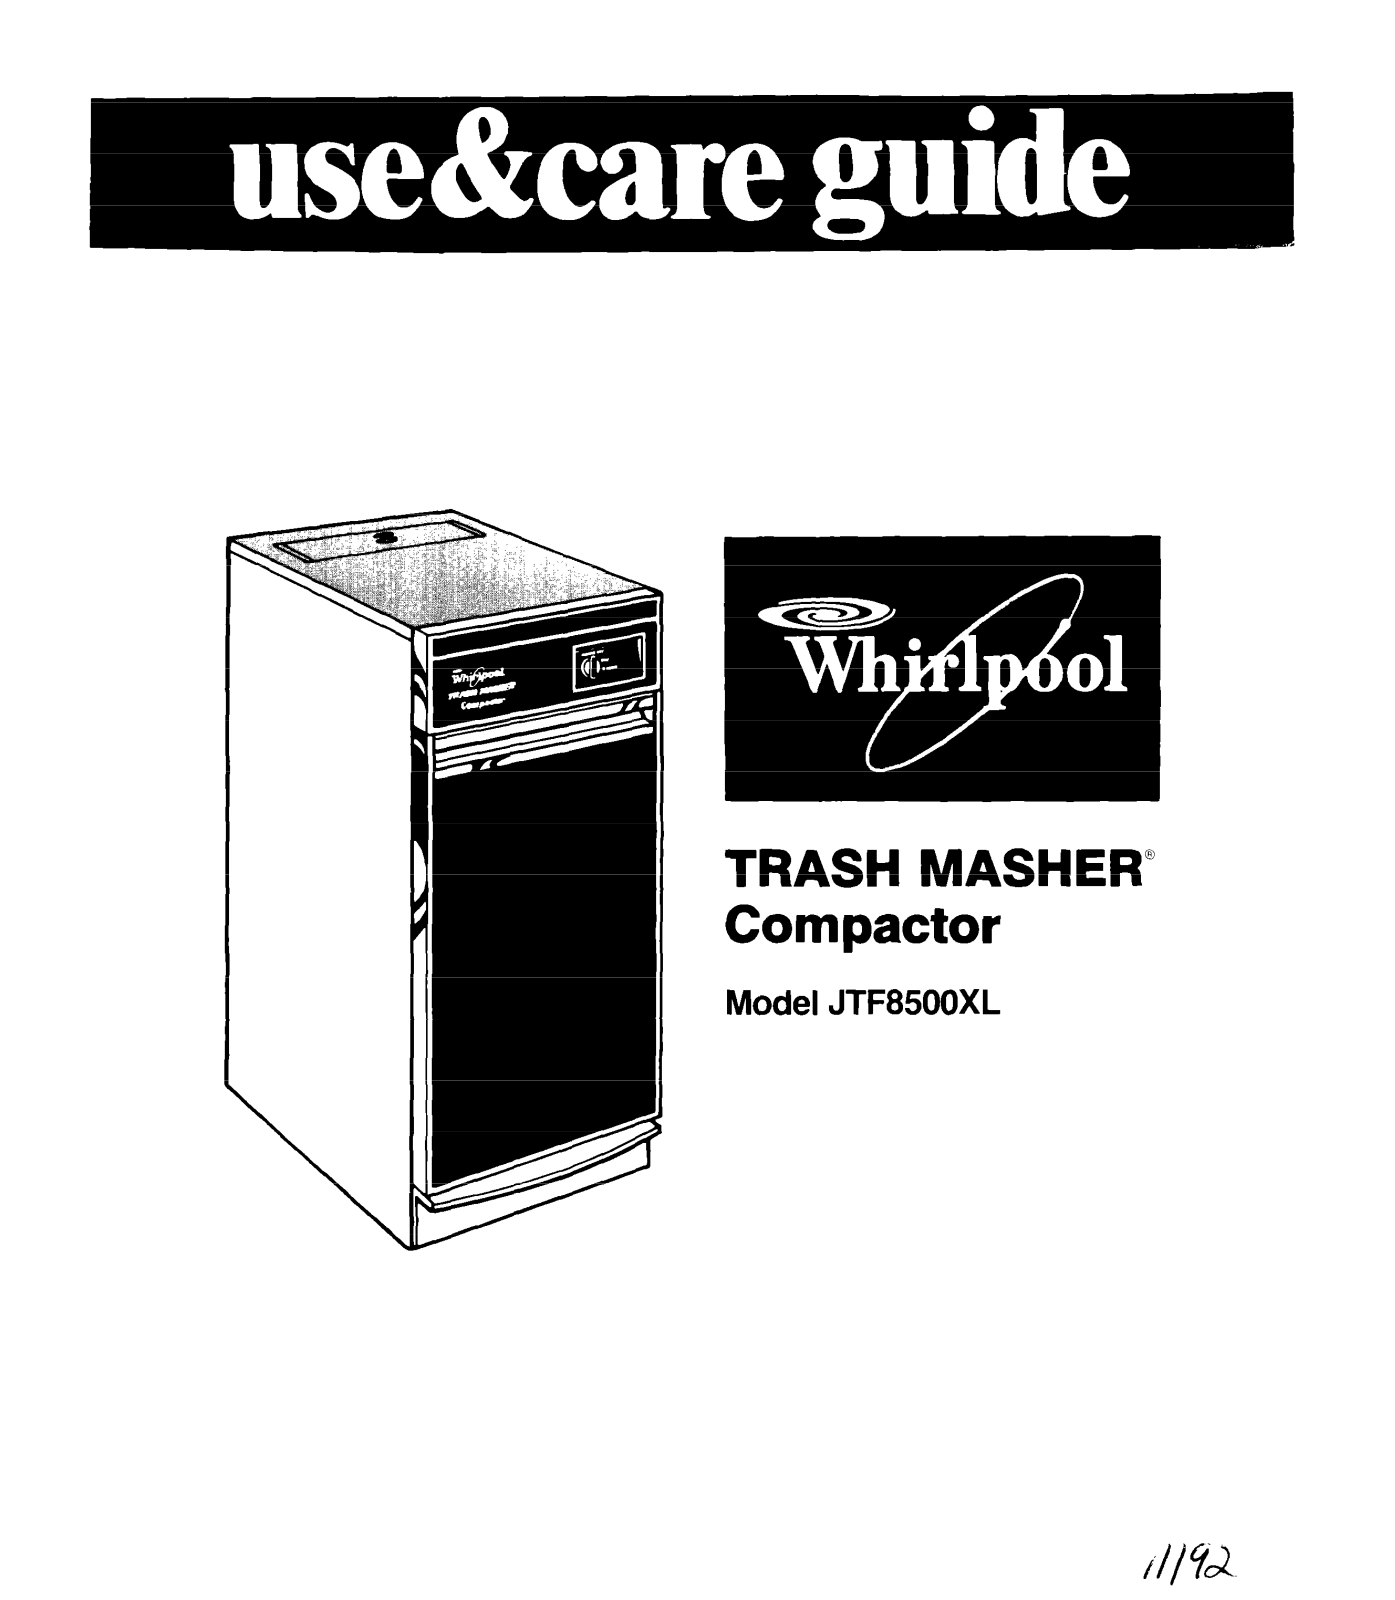 Whirlpool Trash Compactor, TRASH MASHER, JTF8500XL, 403 User Manual